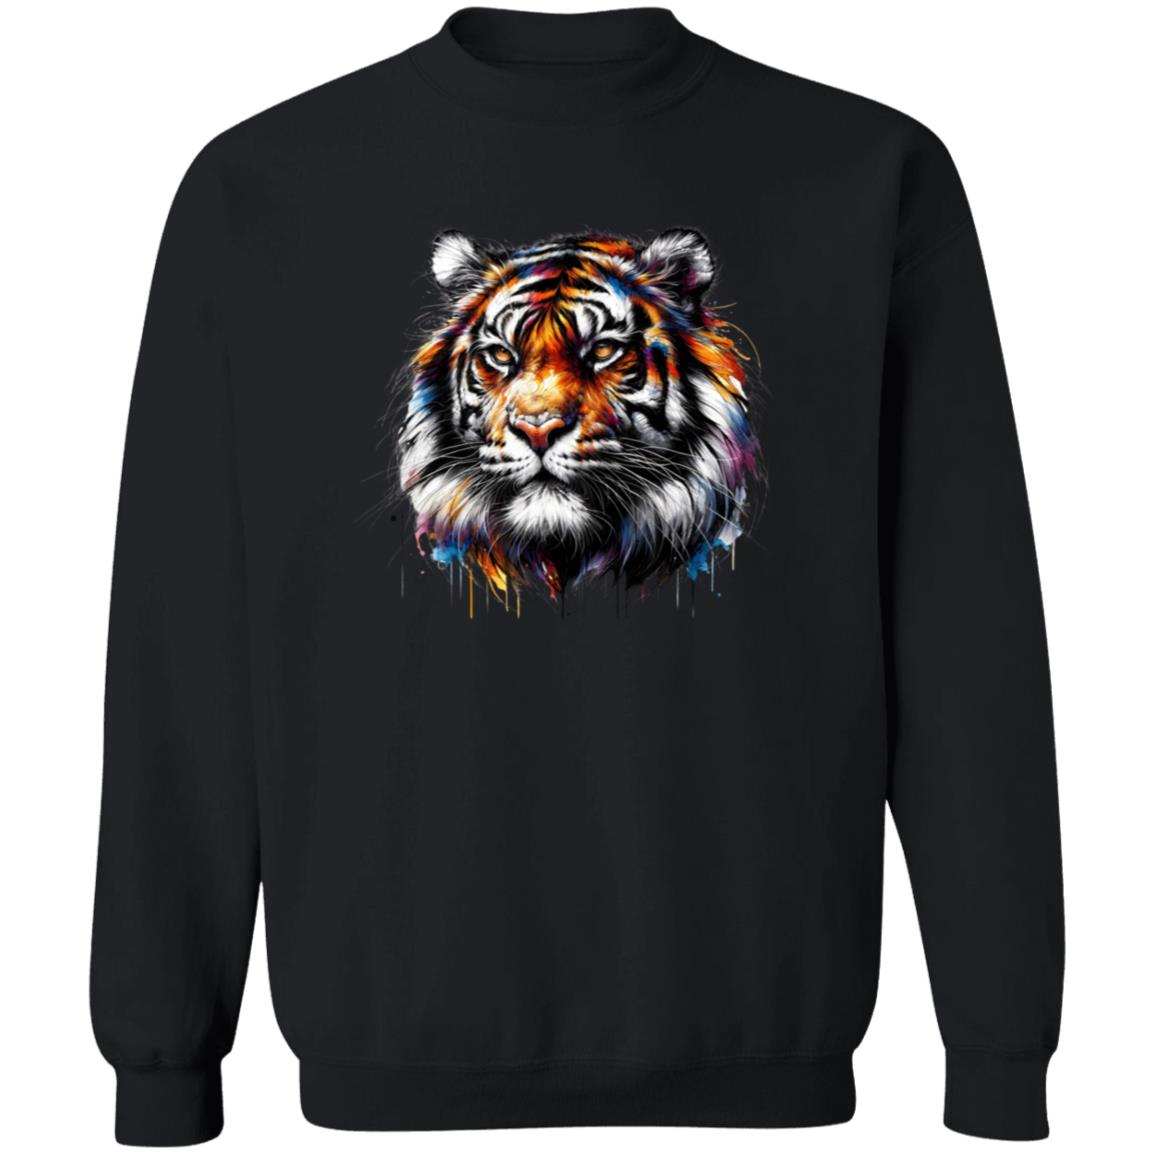 Vibrant Tiger Unisex Sweatshirt Animal lover crewneck Black Navy Dark Heather-Family-Gift-Planet